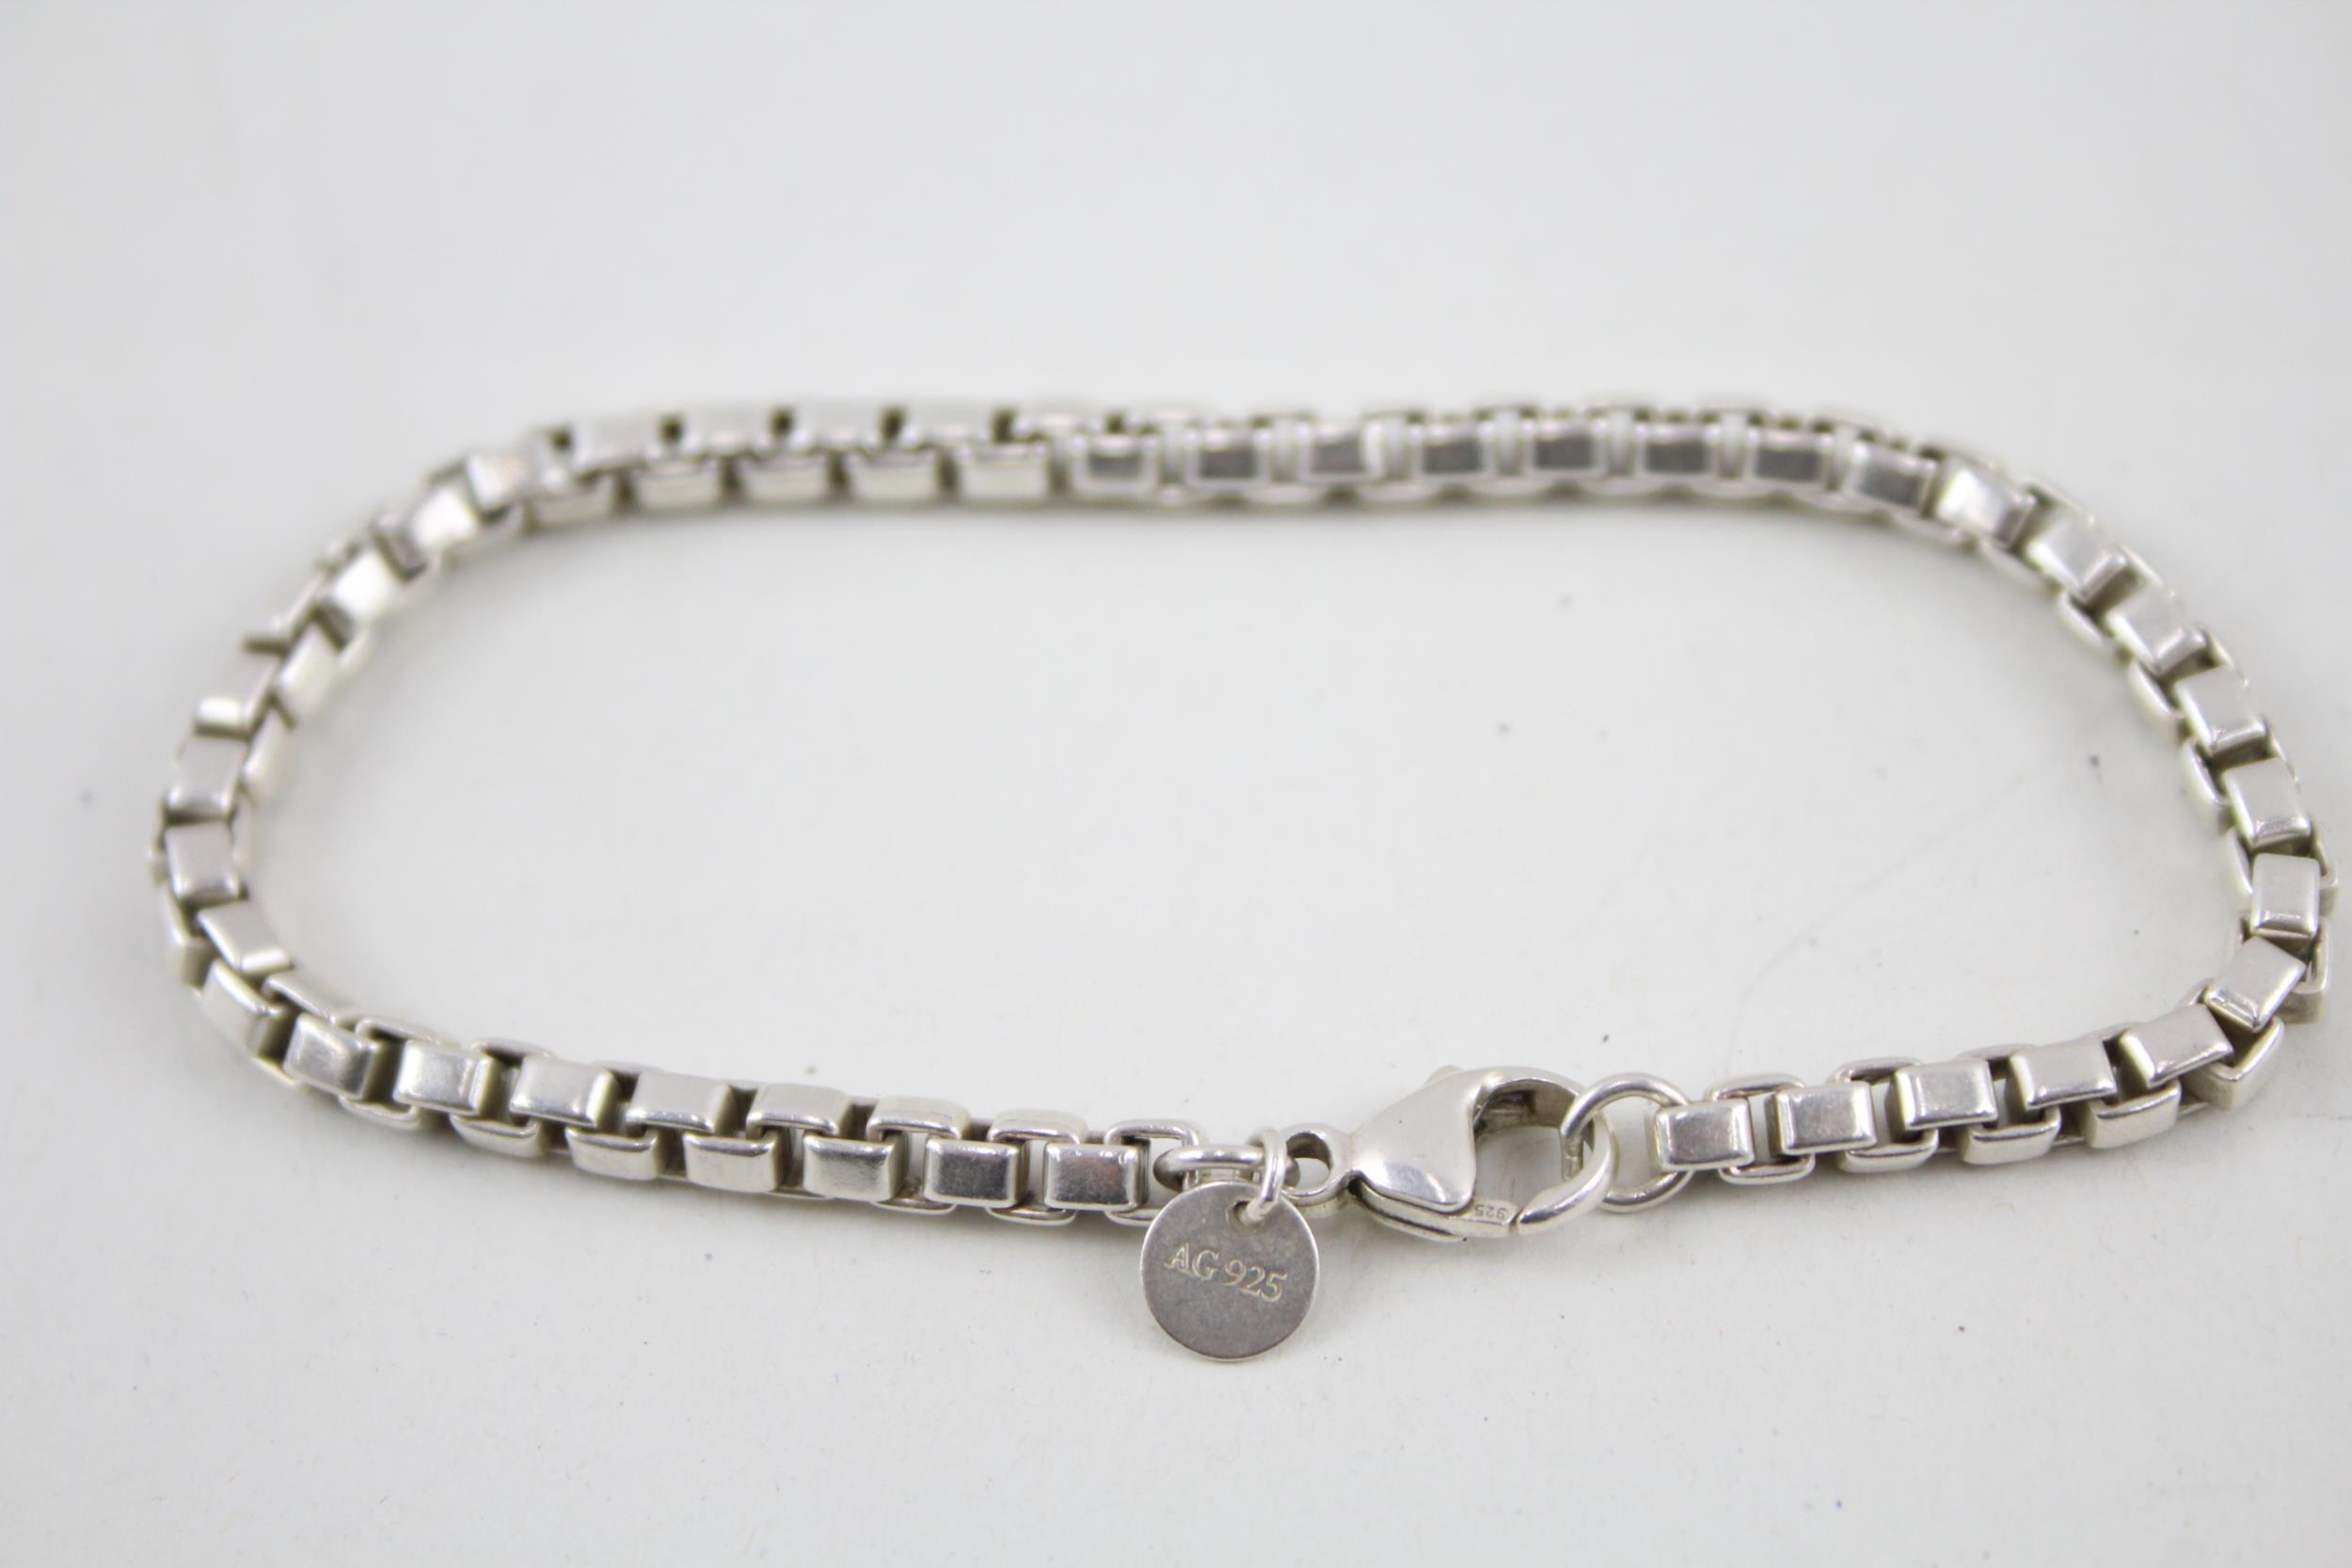 Silver box link bracelet by designer Tiffany & Co (15g) - Image 2 of 5